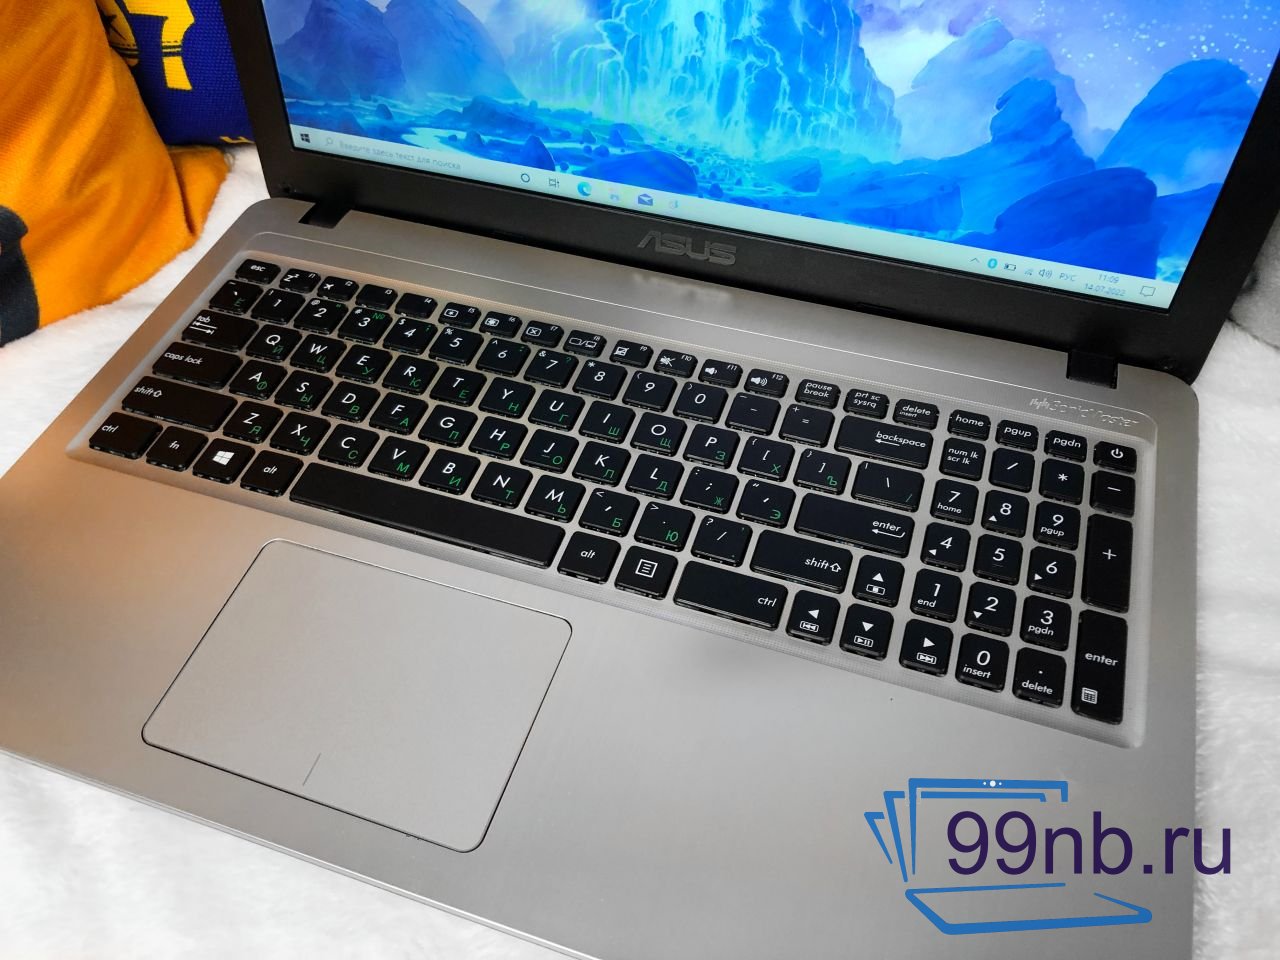  Аренда/лизинг ноутбука Asus 8 Gb ОЗУ+SSD